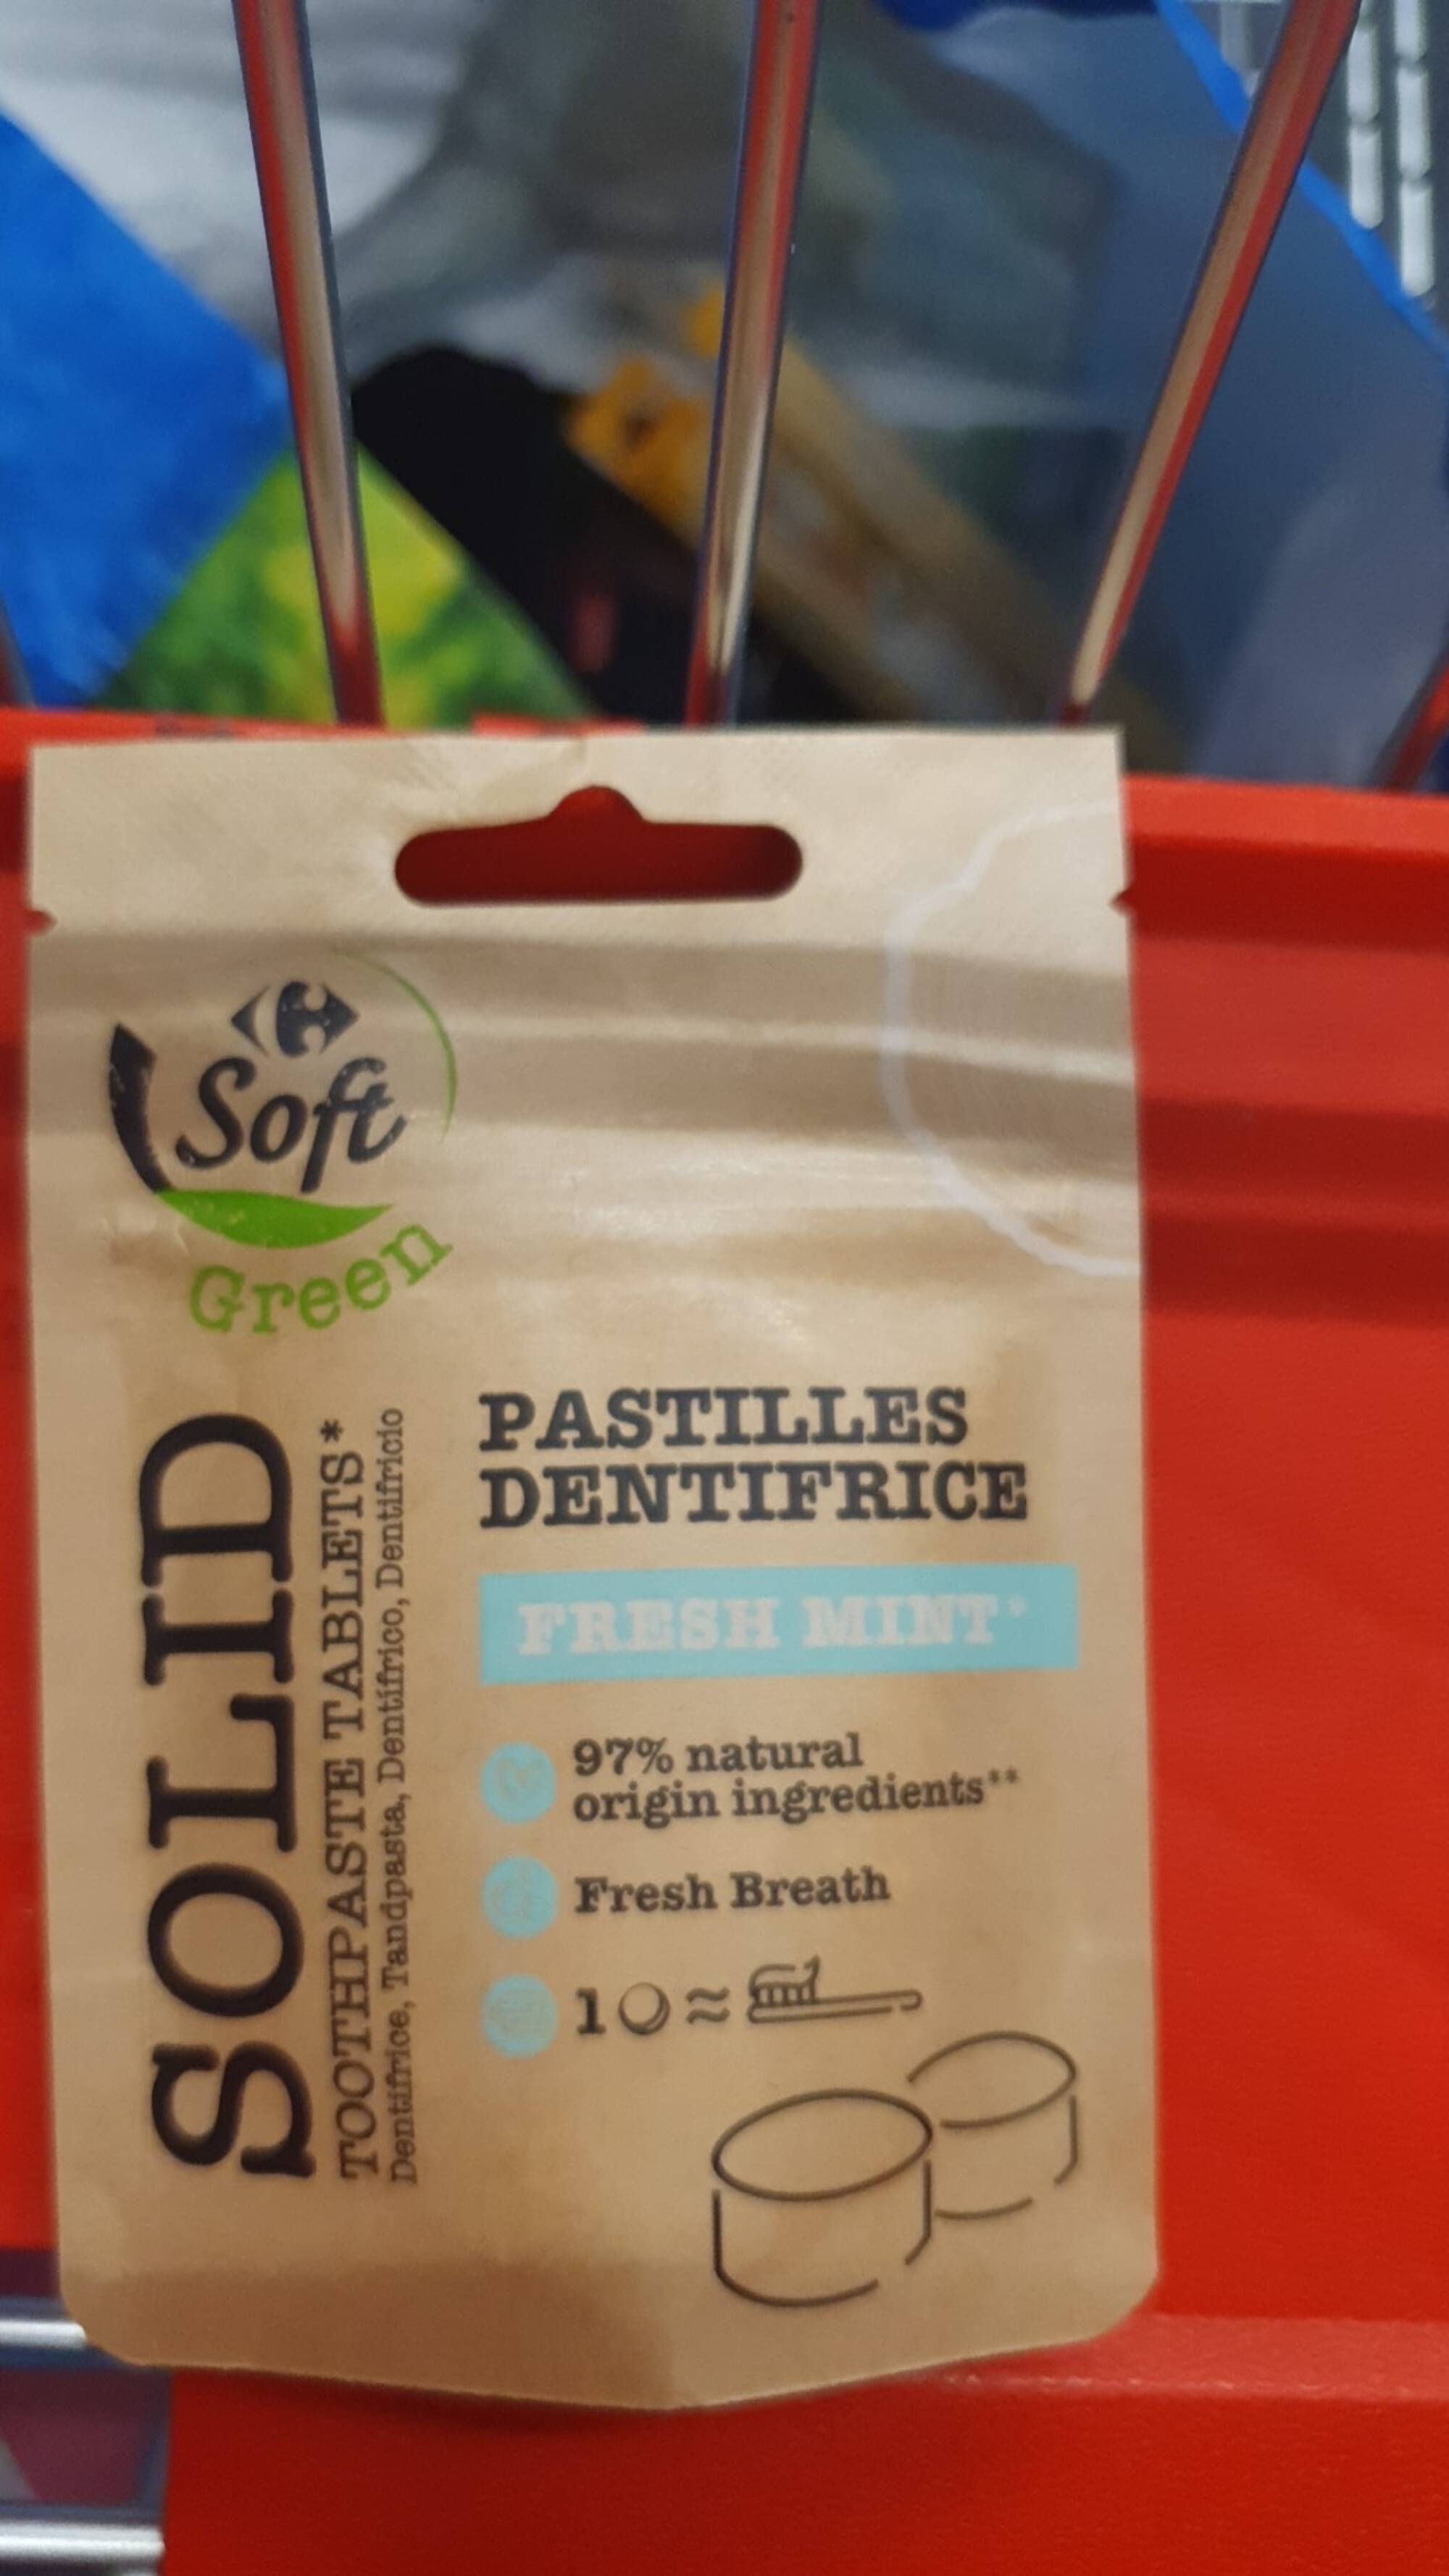 CARREFOUR - Fresh mint - Solid pastilles dentifrice